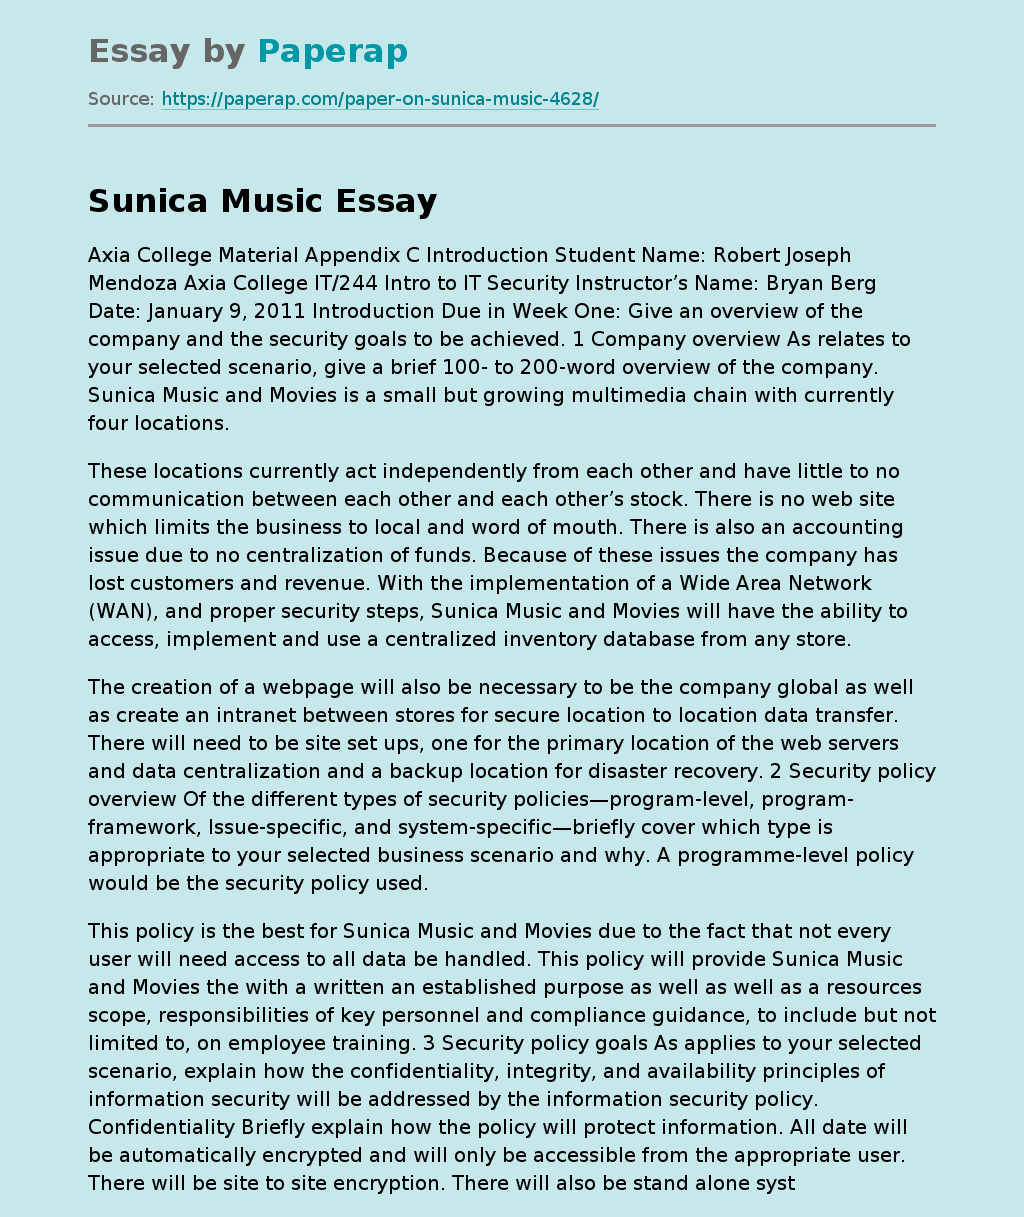 Sunica Music and Movies